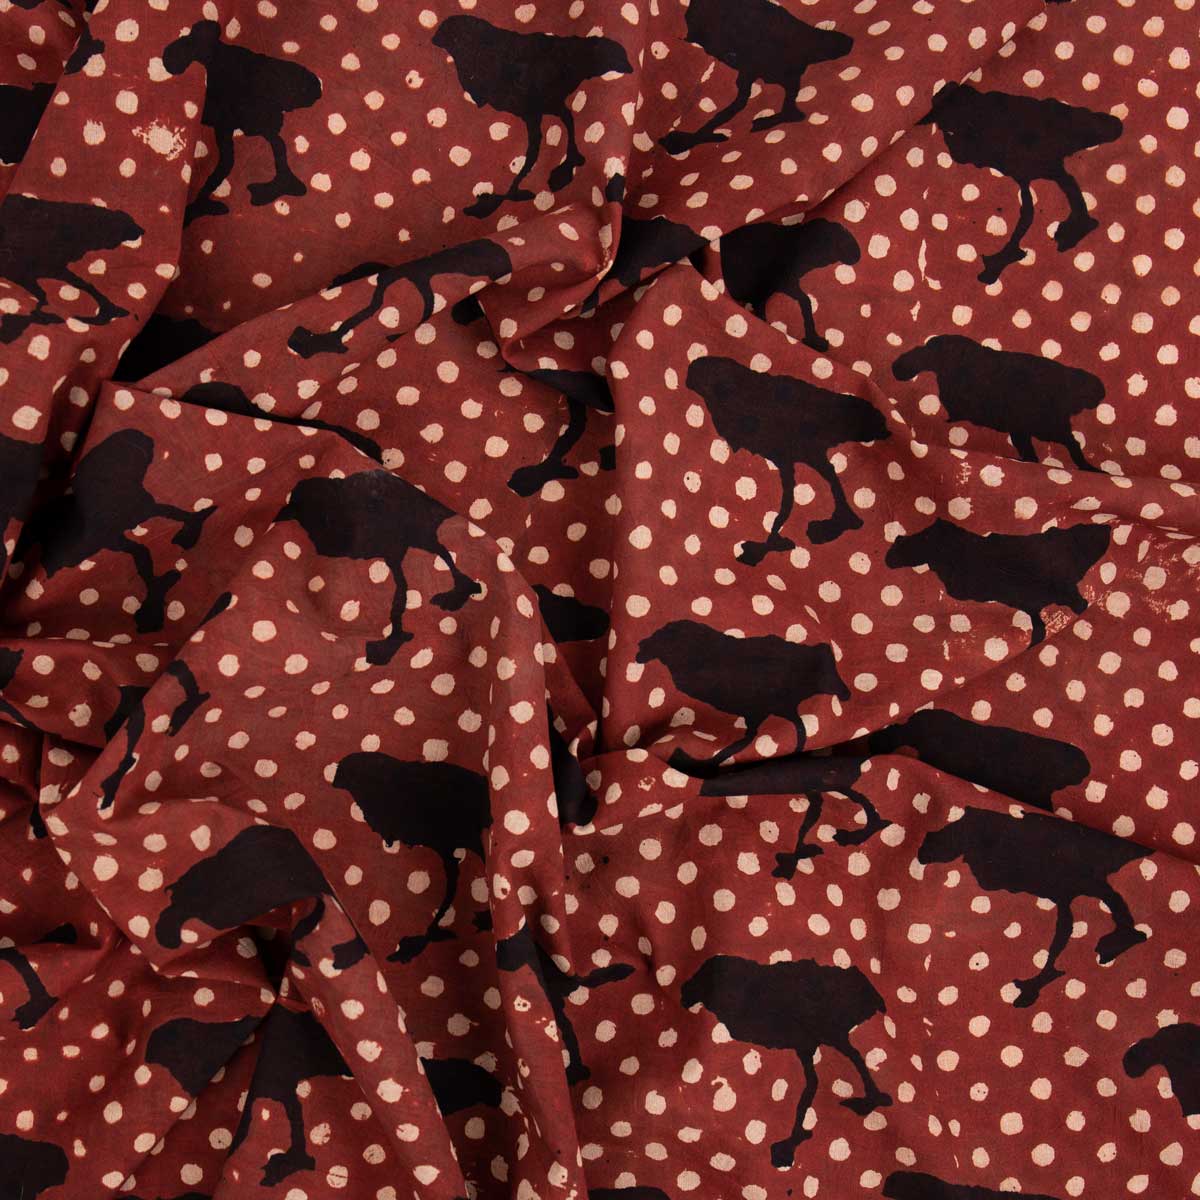 NATURAL BIRDDOT Fabric, red/black